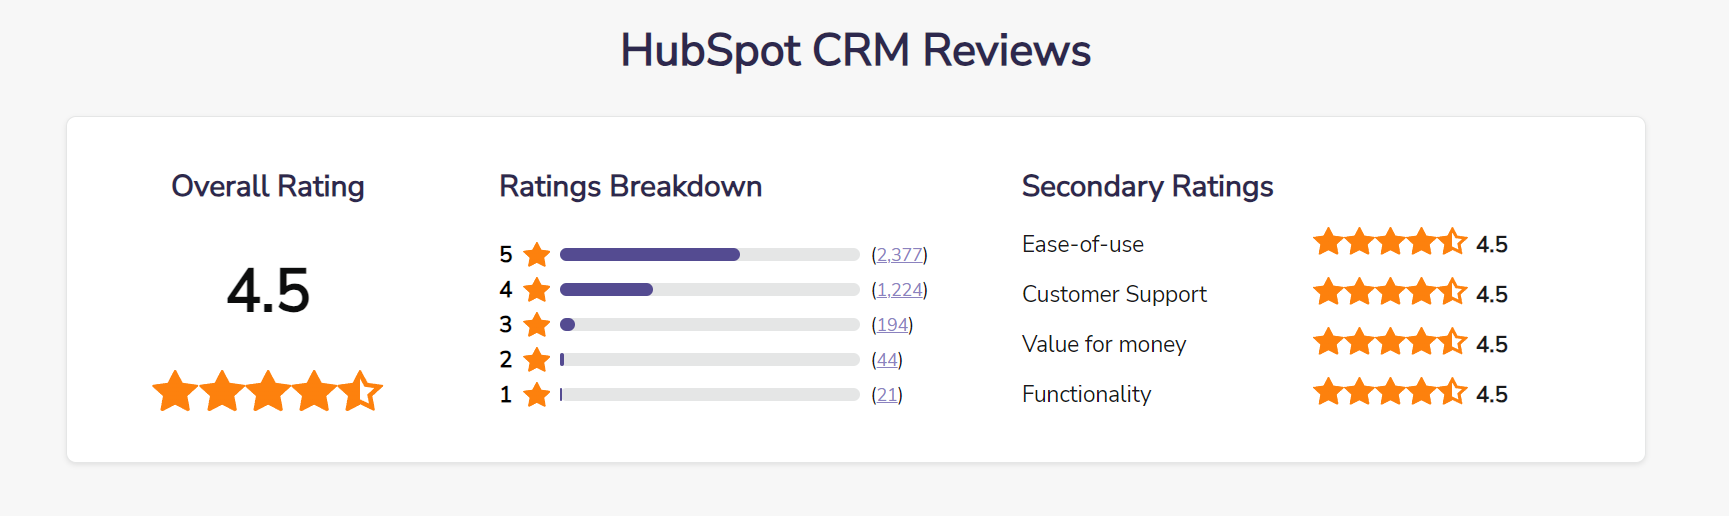 hubspot-crm-review-software-advice